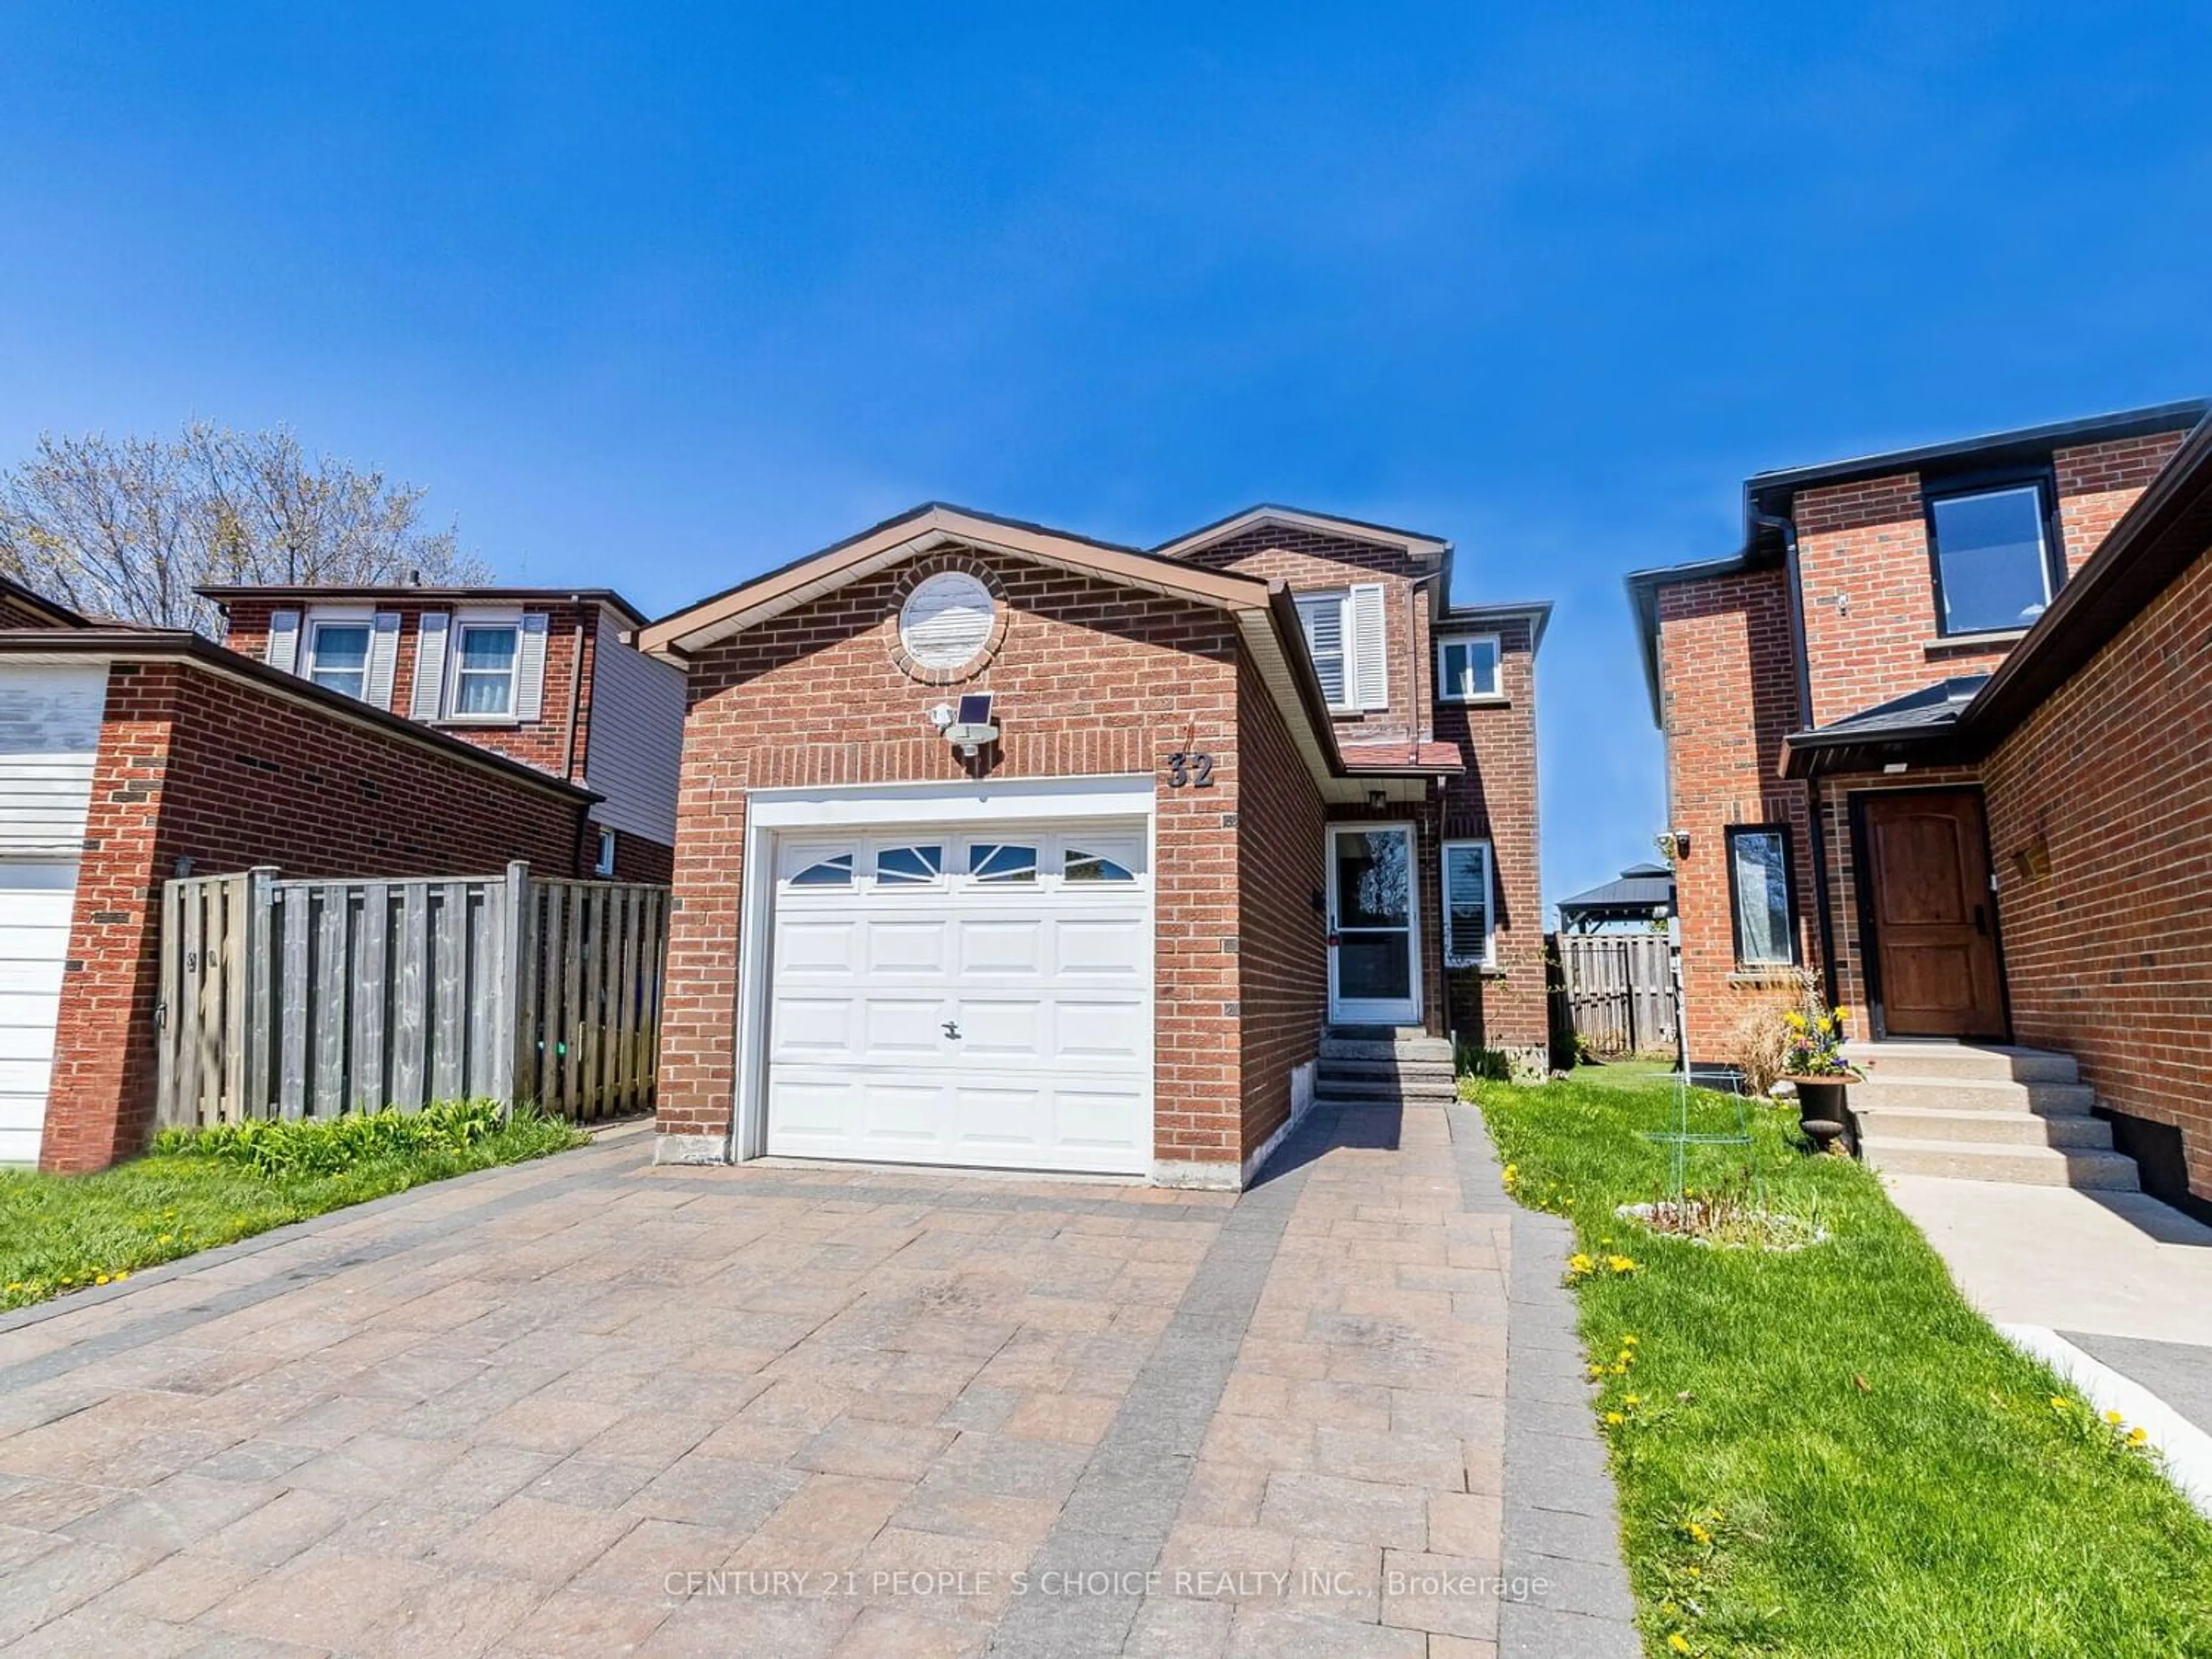 Home with brick exterior material for 32 Fieldside Dr, Toronto Ontario M1V 3C5